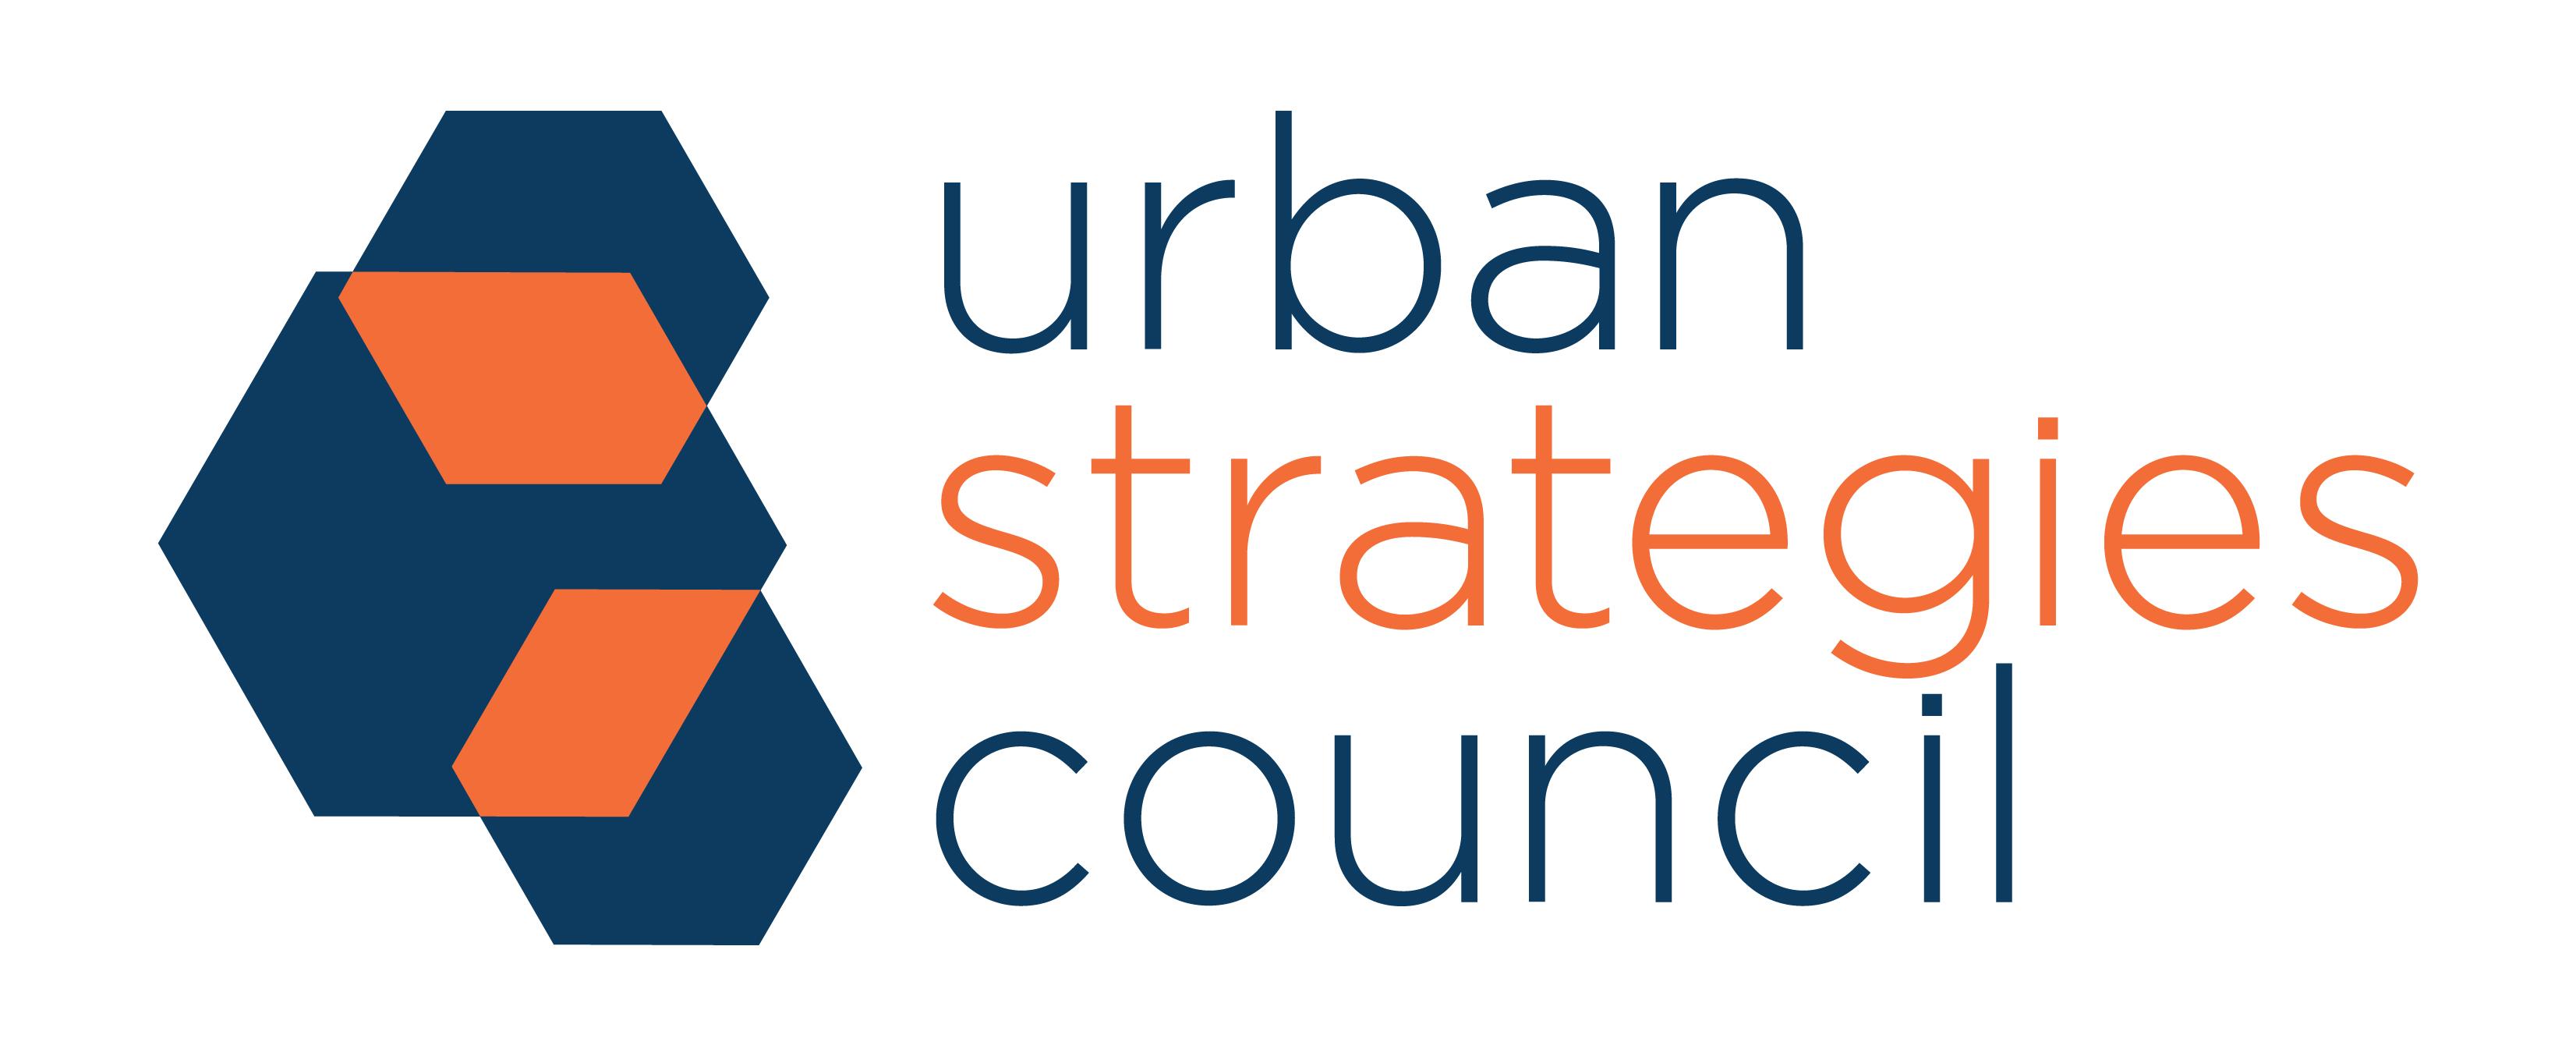 Council Logo - Urban Strategies Council